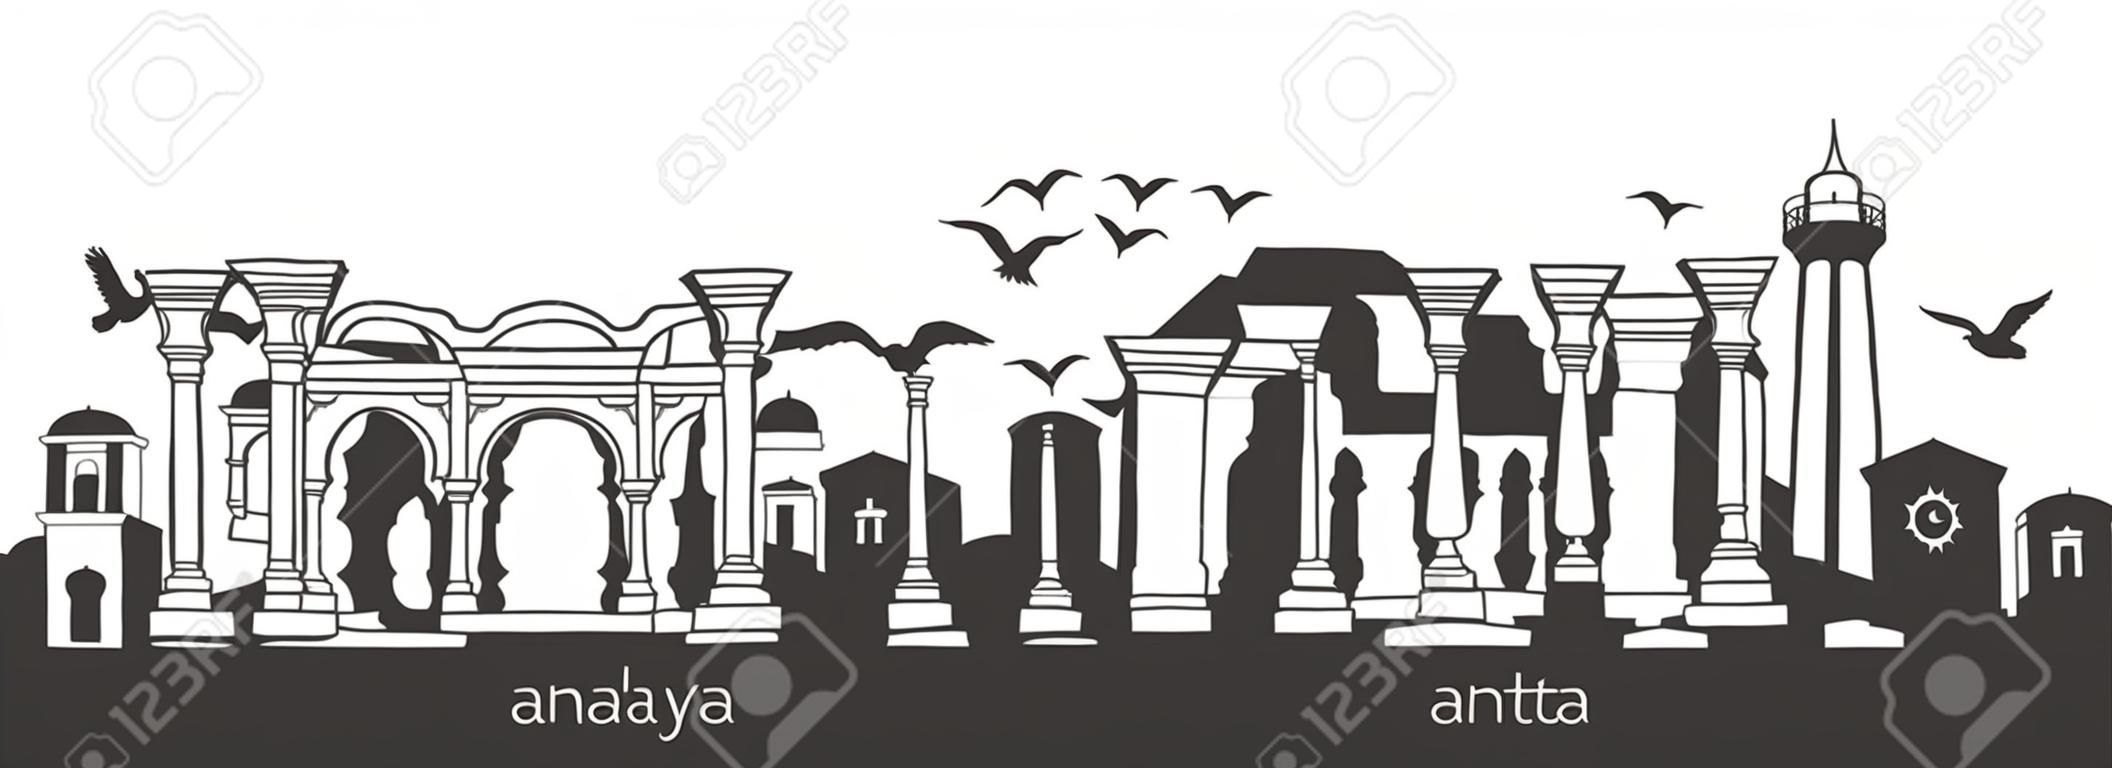 Antalya, Turkey with hand drawn doodle turkish symbols. Horizontal panoramic scene for banner or print design. Flat minimalistic style with black elements.